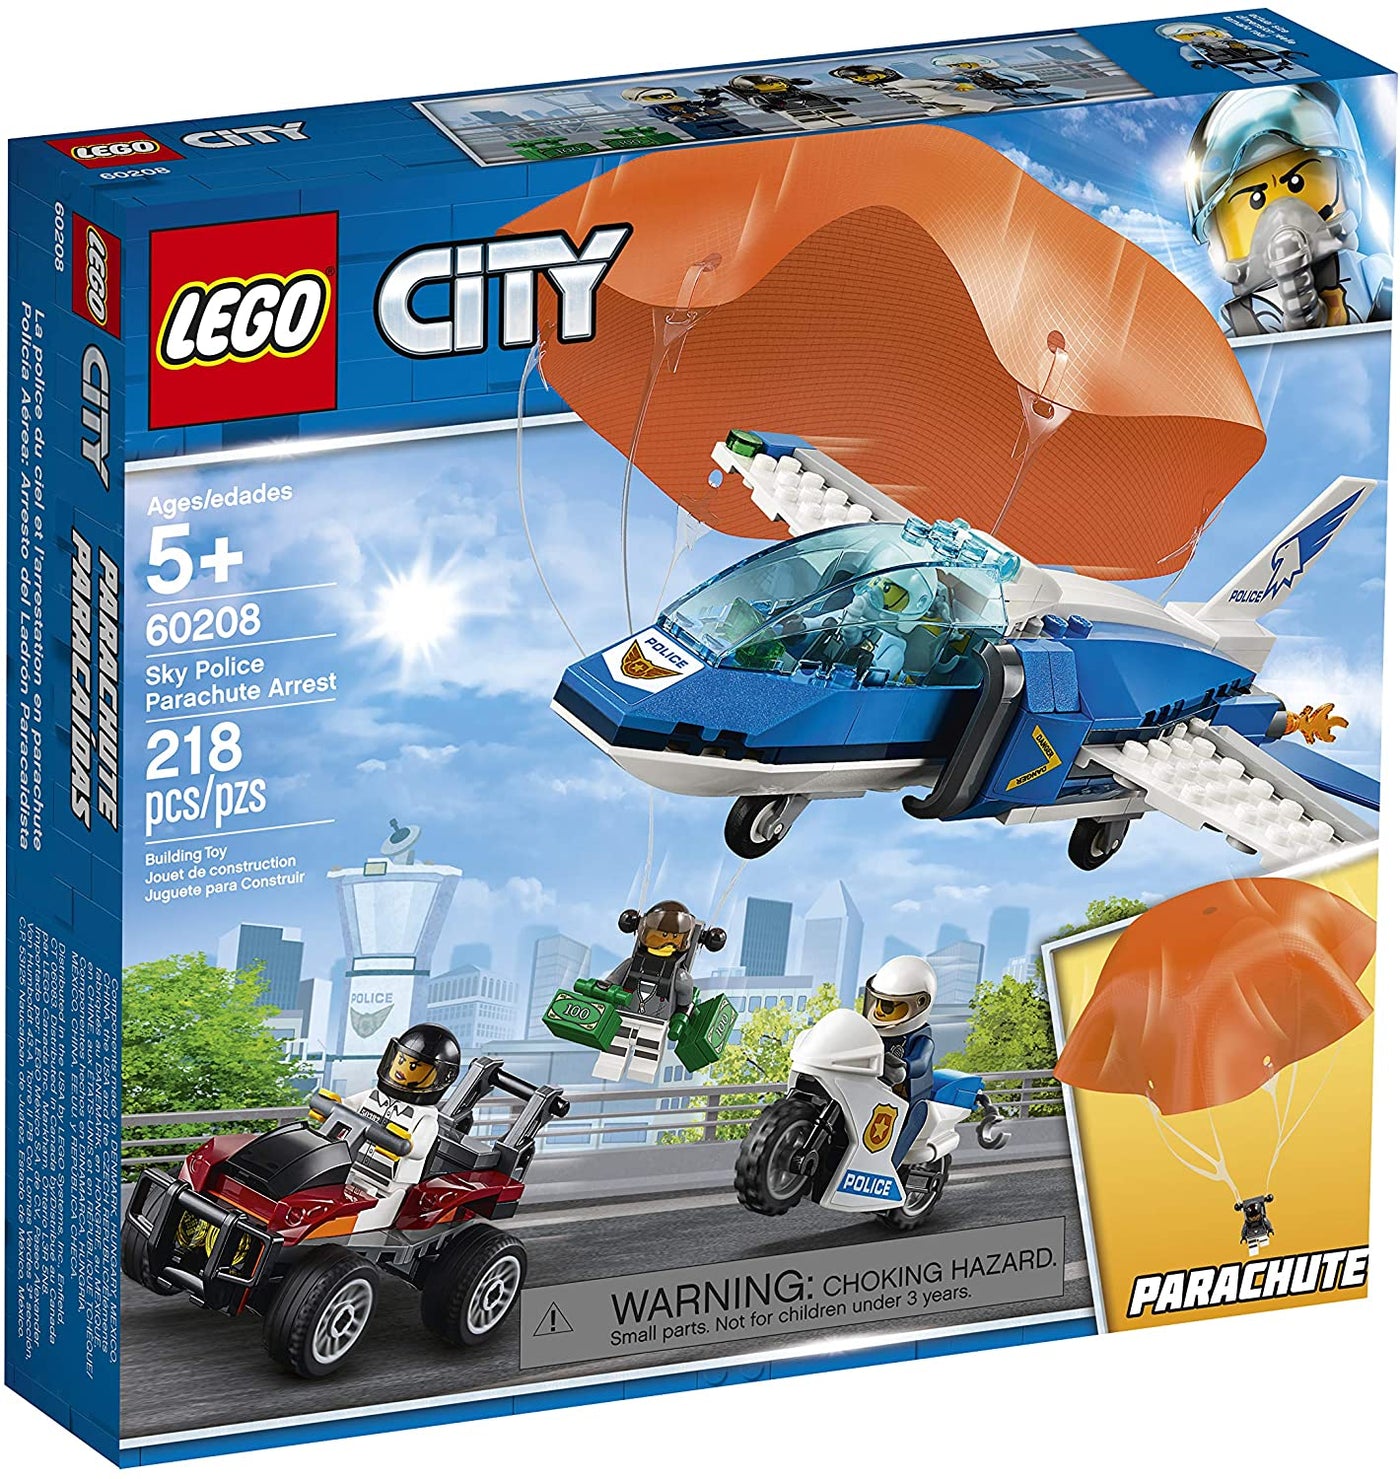 Sky Police Parachute Arrest, 60208 | LEGO® City